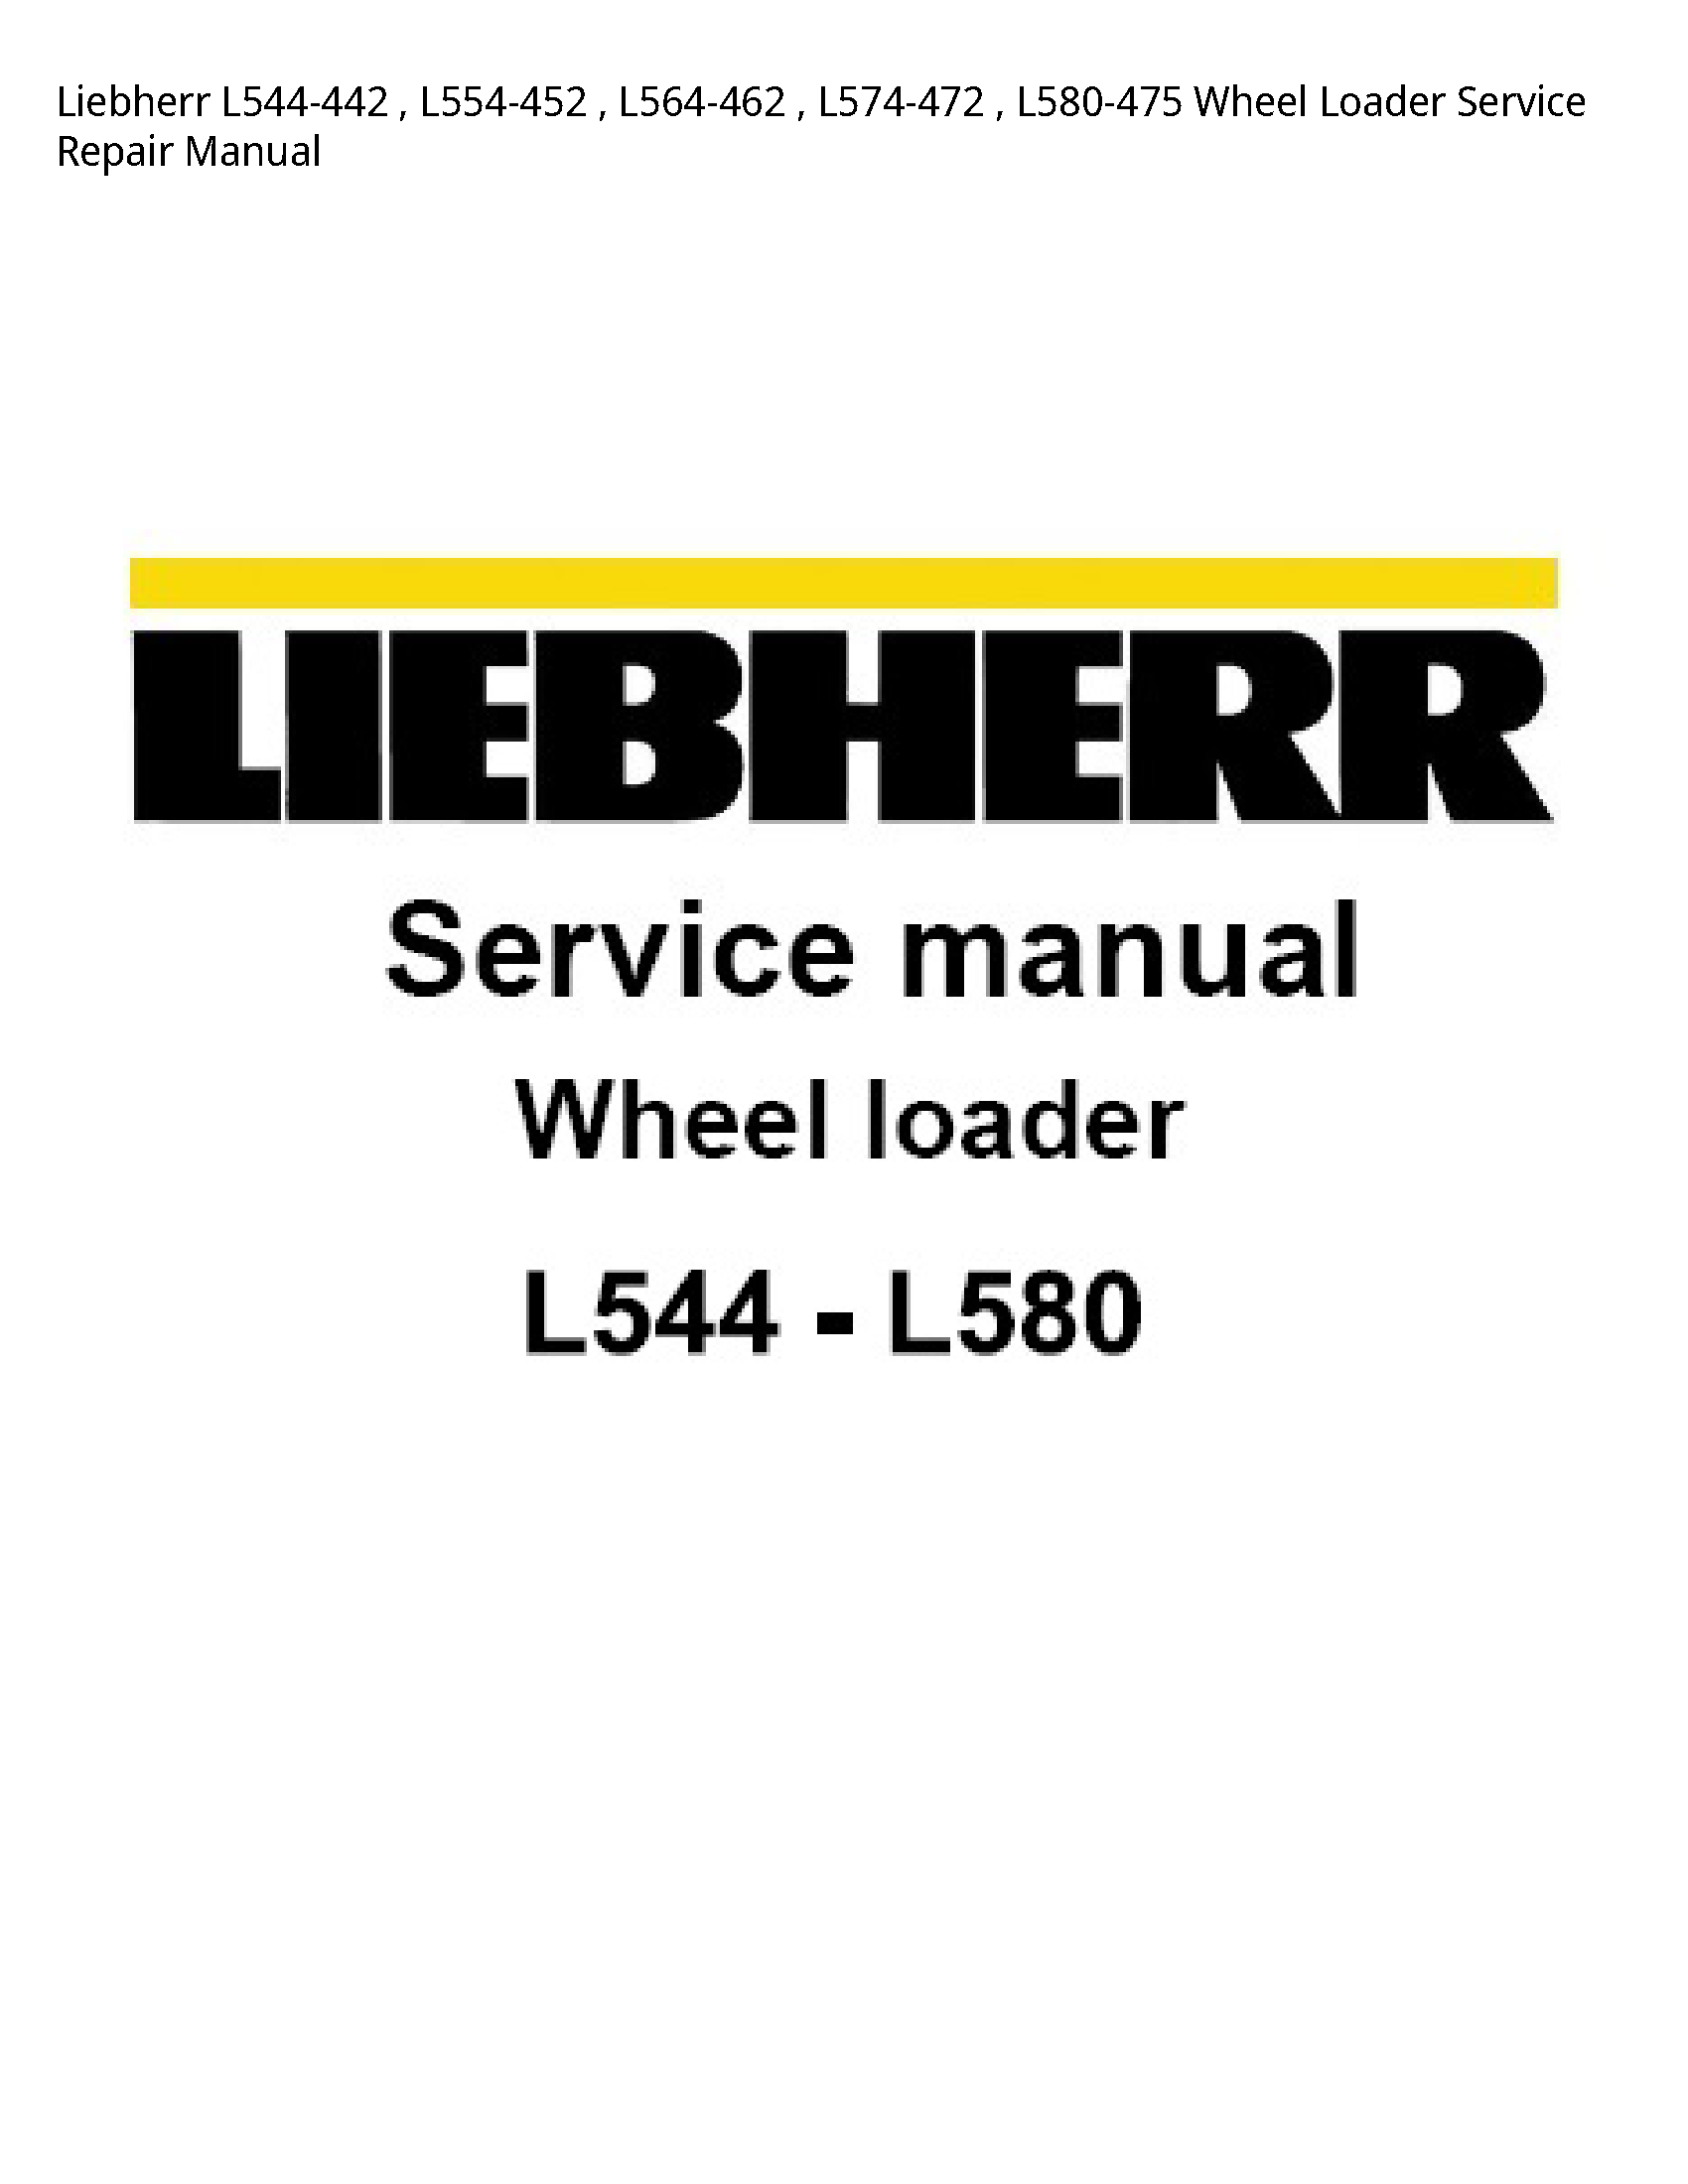 Liebherr L544-442 Wheel Loader manual